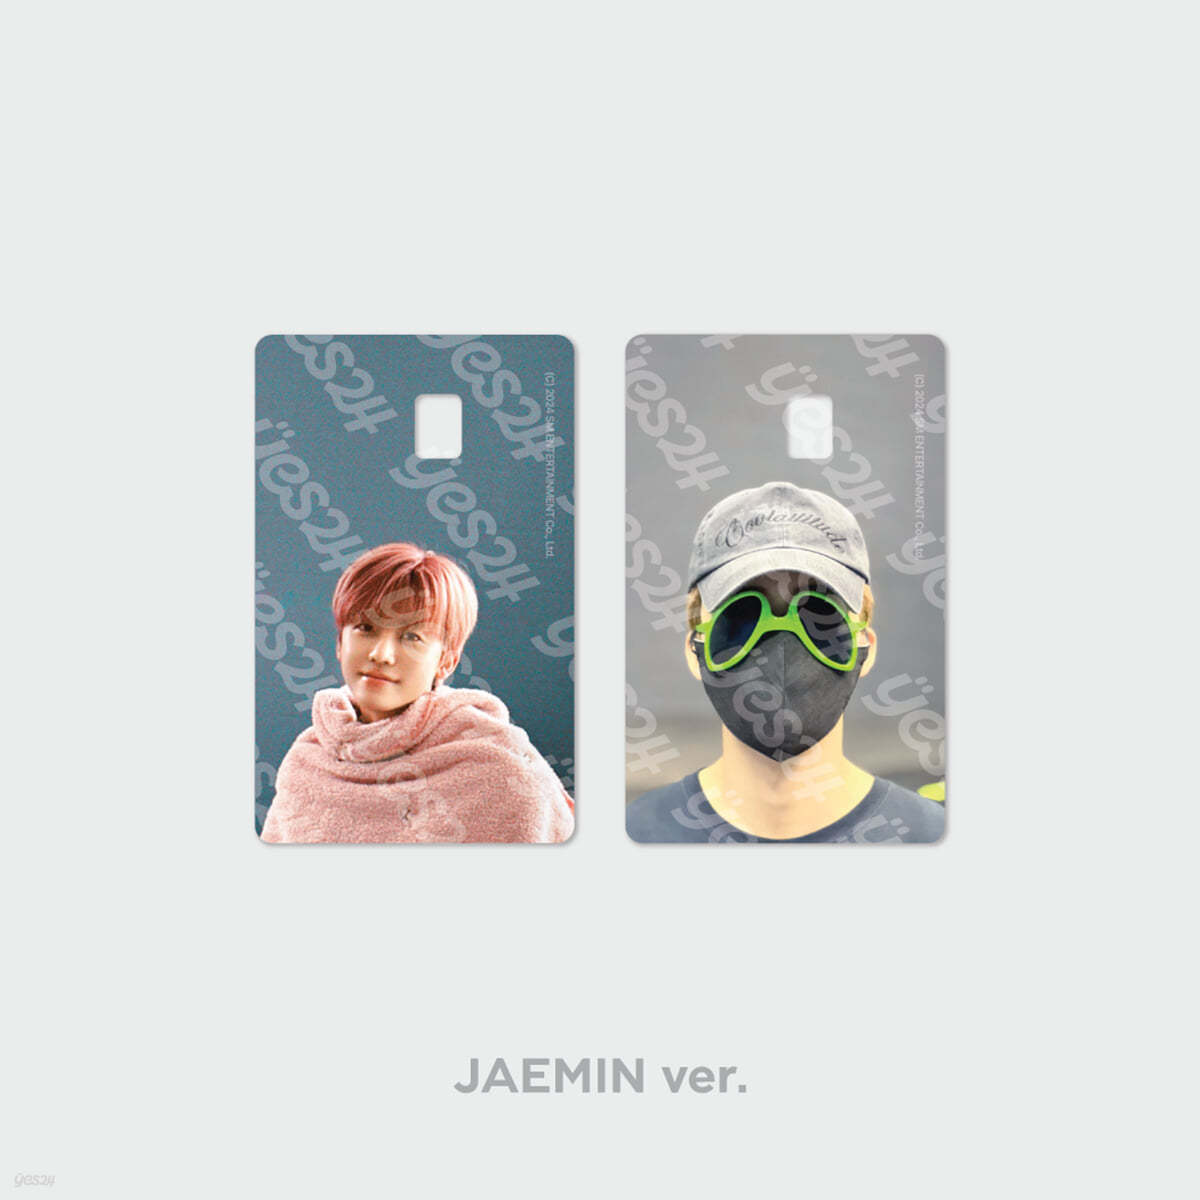 [NARCISSISM : JAEMIN 1st PHOTO EXHIBITION] CARD COVER STICKER [재민 ver.]